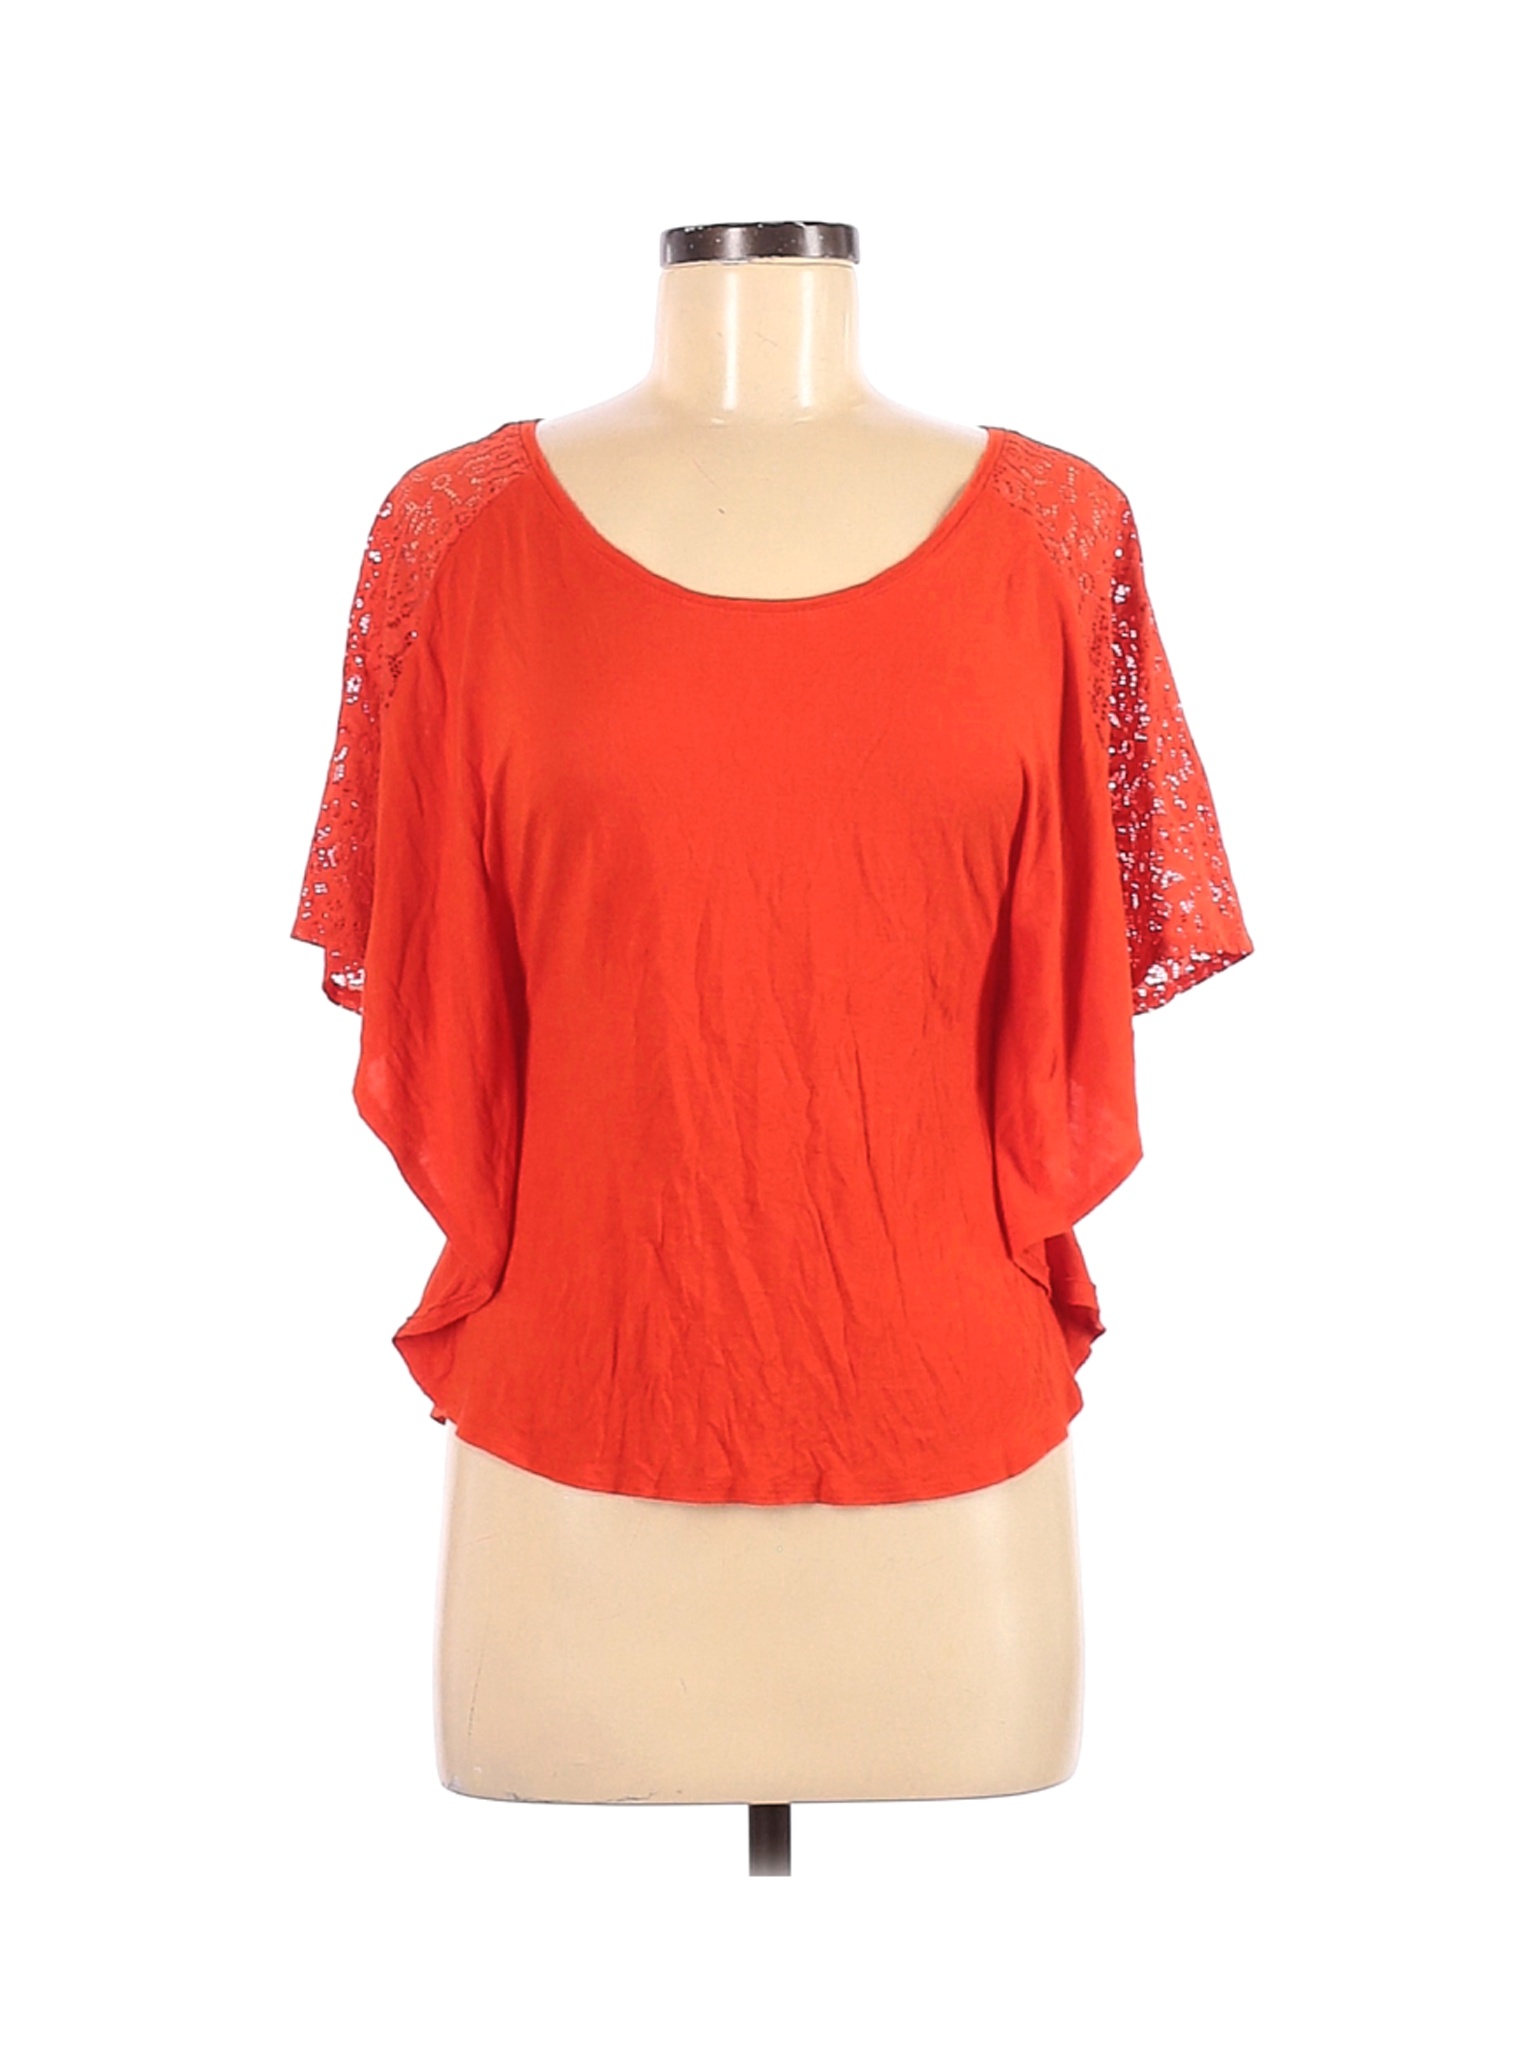 H&M Women Orange Short Sleeve Top S | eBay